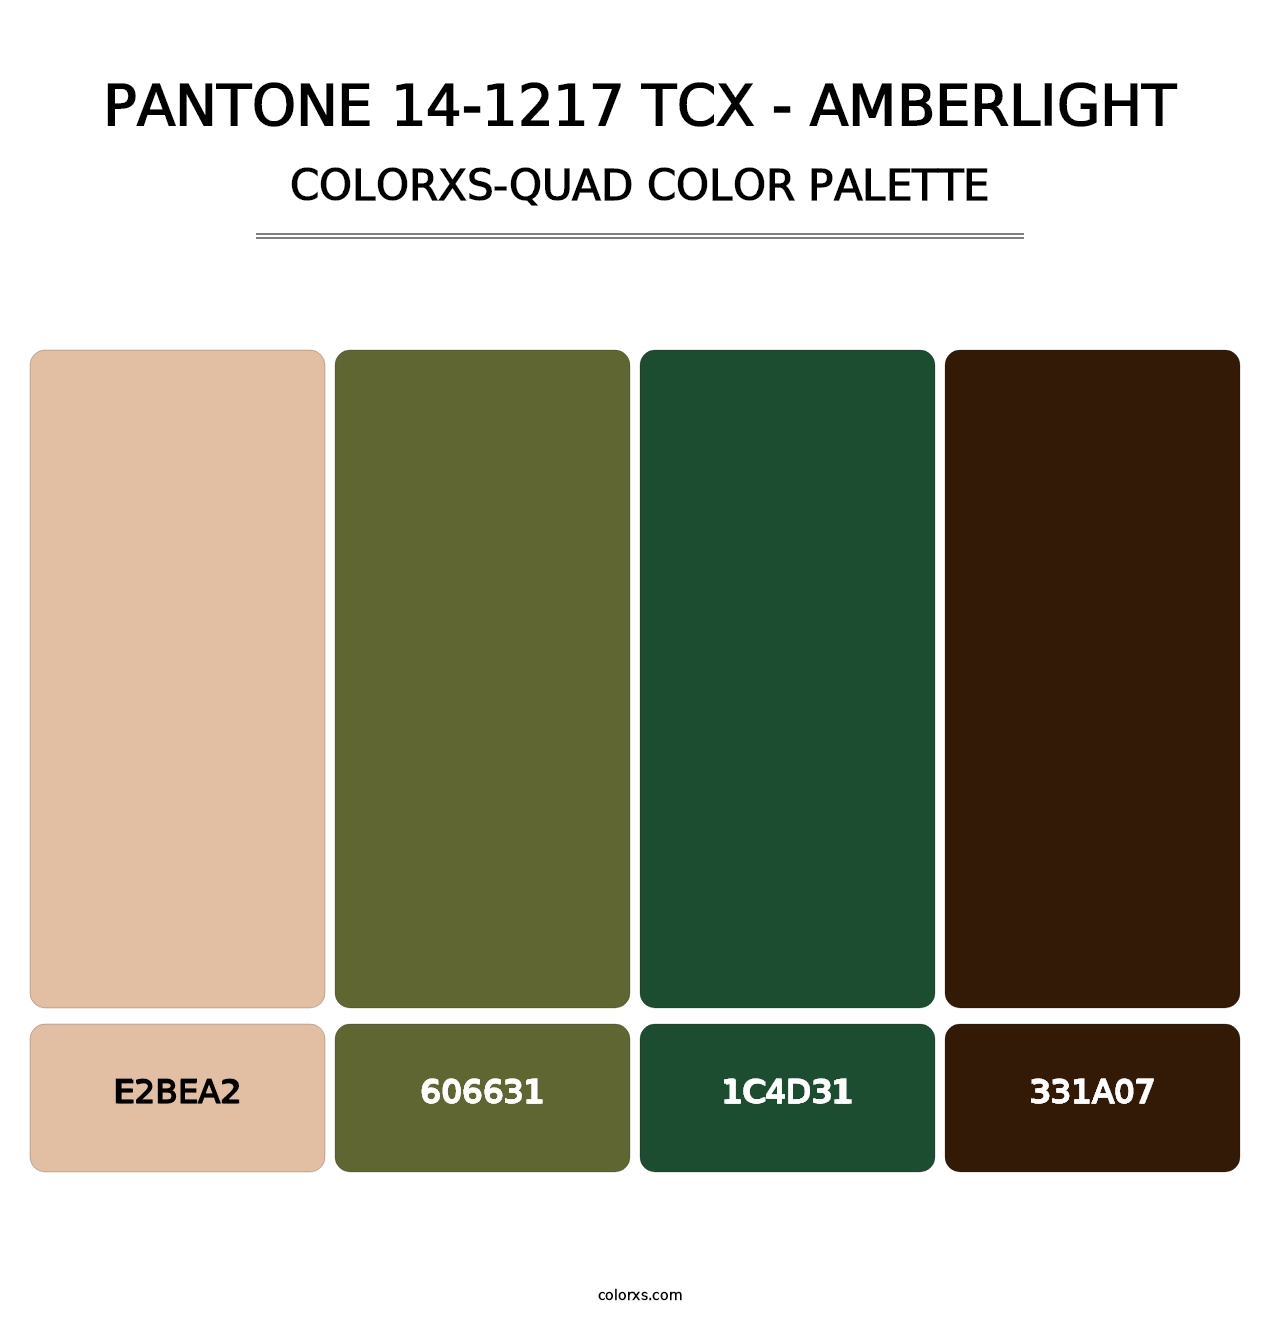 PANTONE 14-1217 TCX - Amberlight - Colorxs Quad Palette